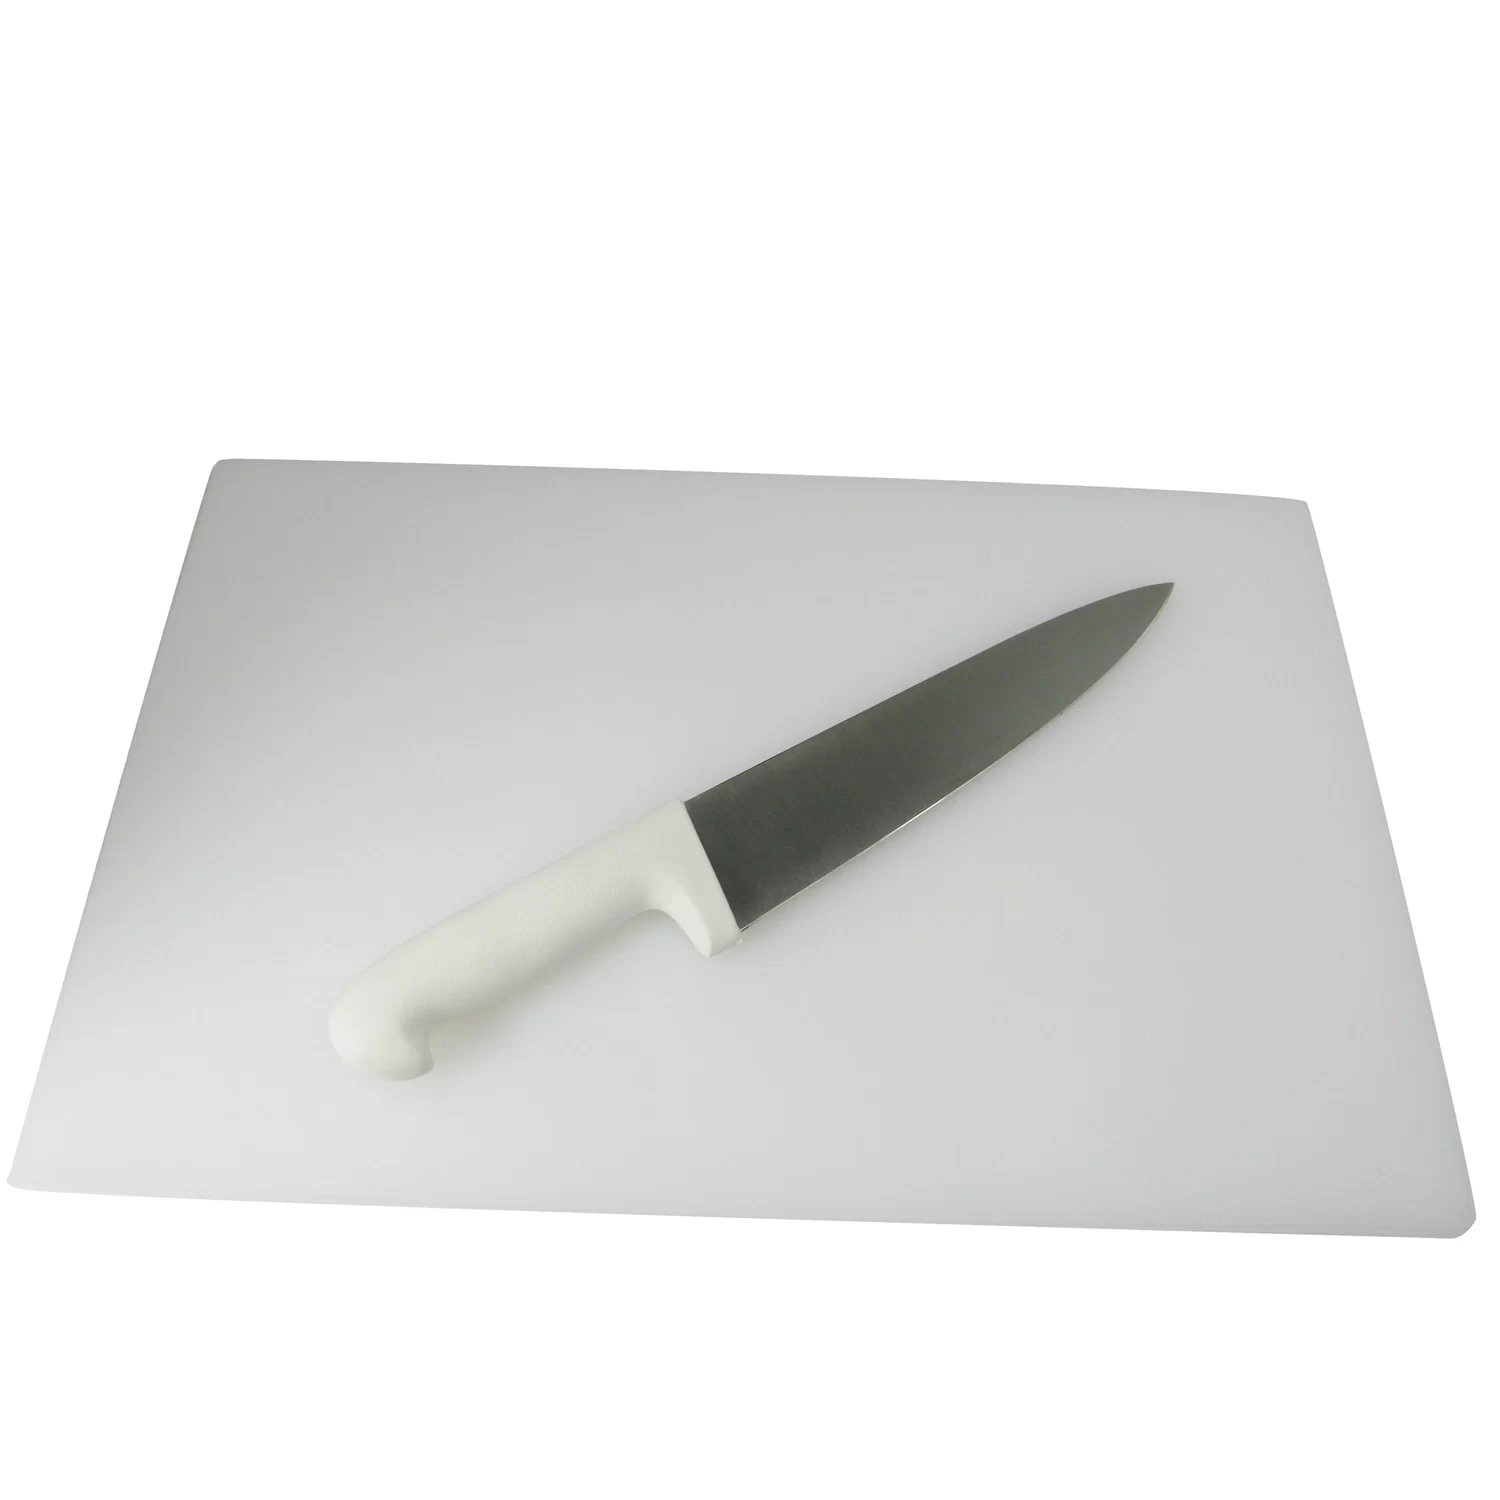 Chopping Board 12x18 / 30x45cm - Gompels - Care & Nursery Supply Specialists